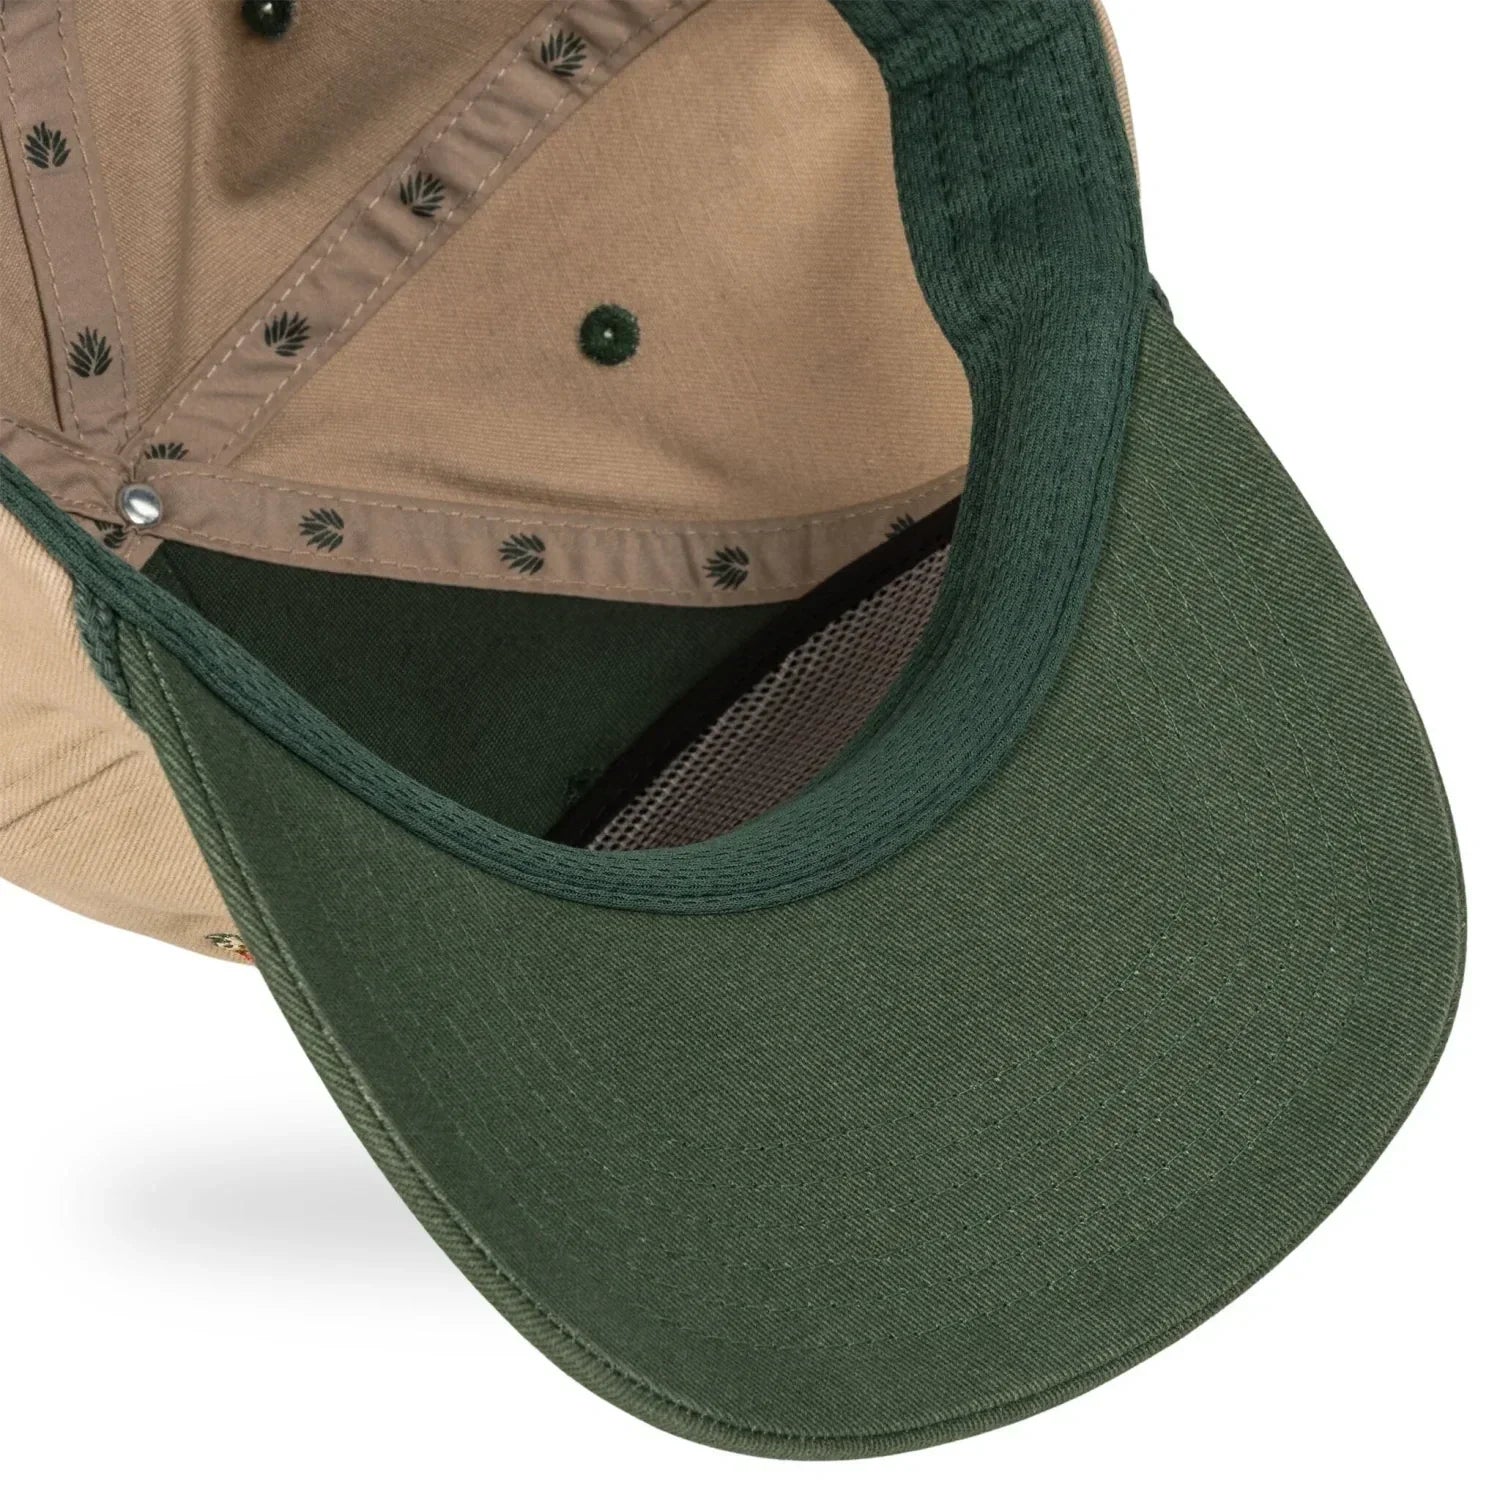 Sendero Provisions Co. 11. HATS - HATS BILLED - HATS BILLED Hand Tied Flies Hat